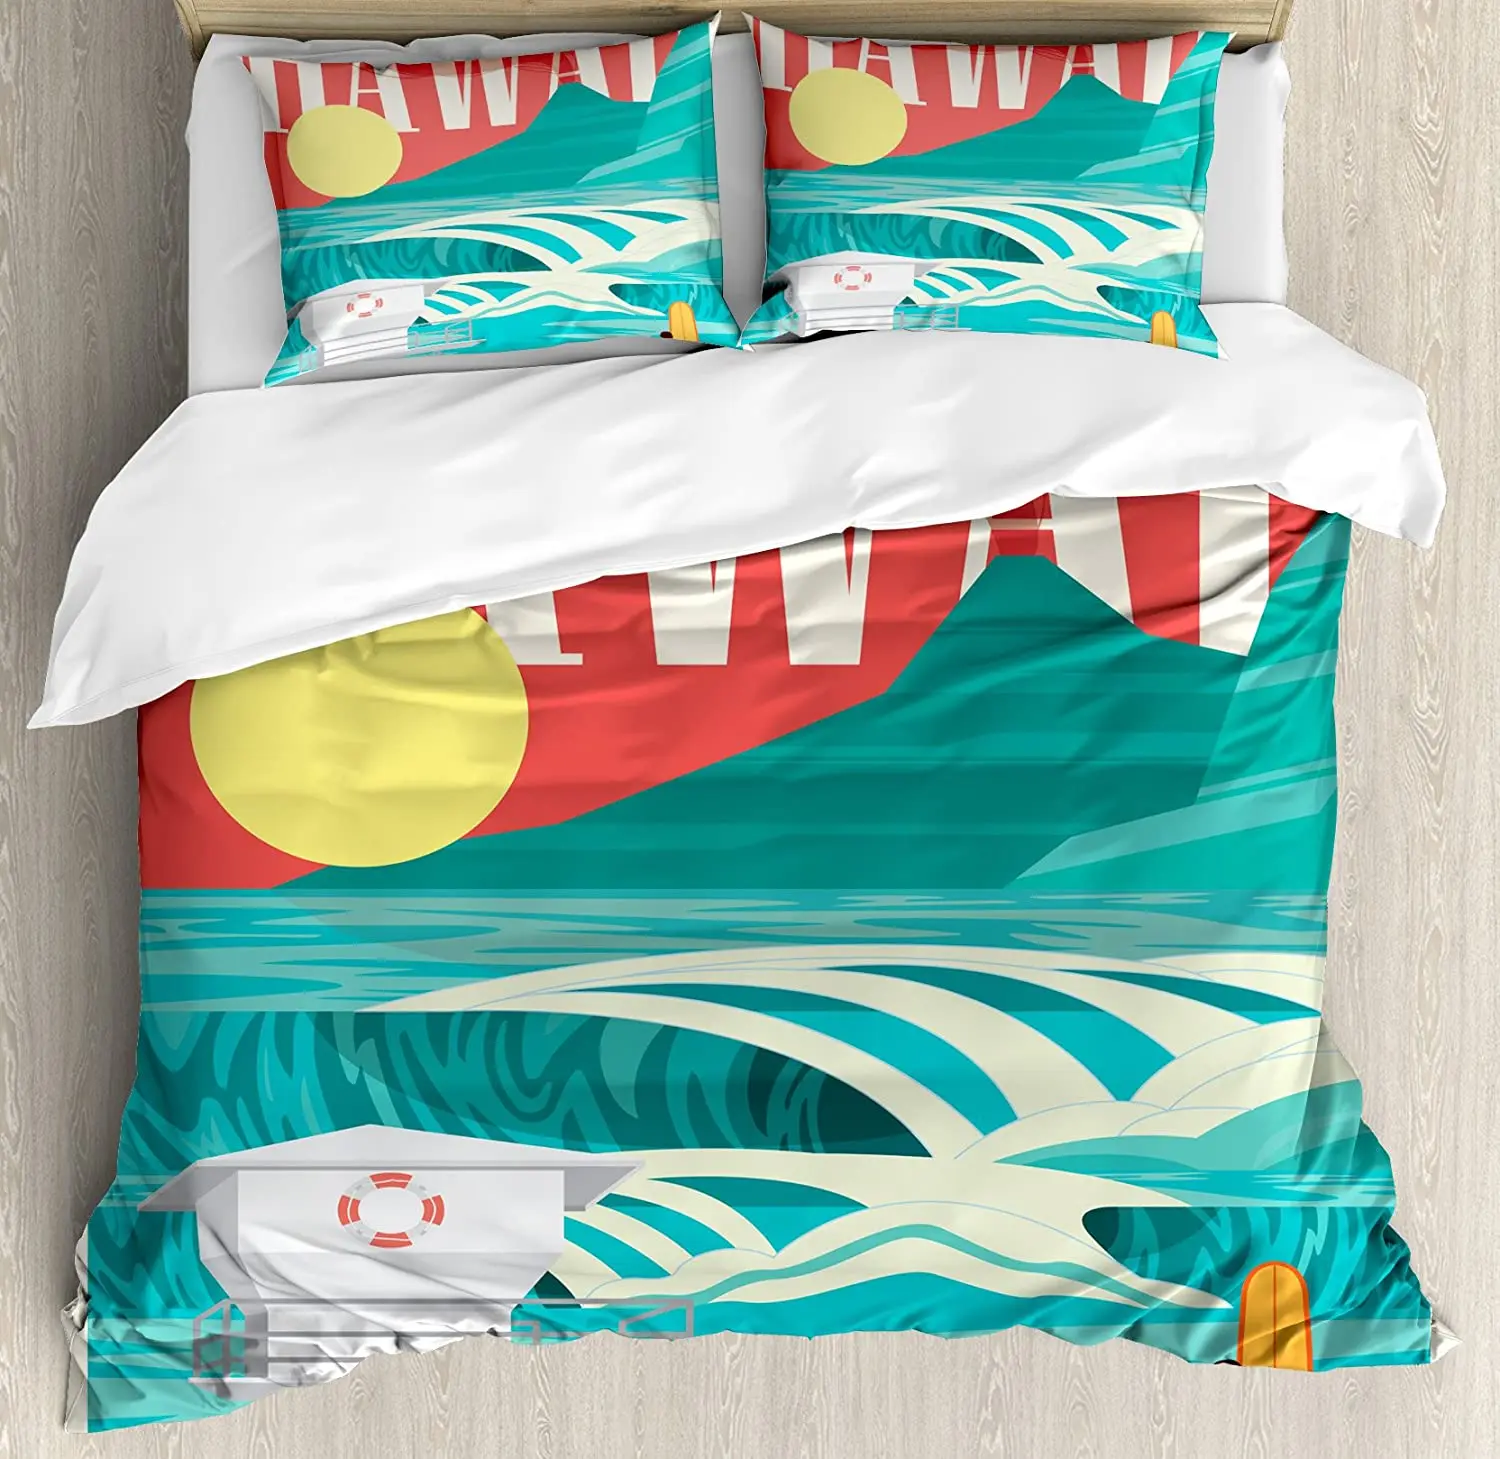 

Hawaiian Bedding Set For Bedroom Bed Home Hawaii Sandy Coastline Sunny Day Surfboard Tropi Duvet Cover Quilt Cover Pillowcase